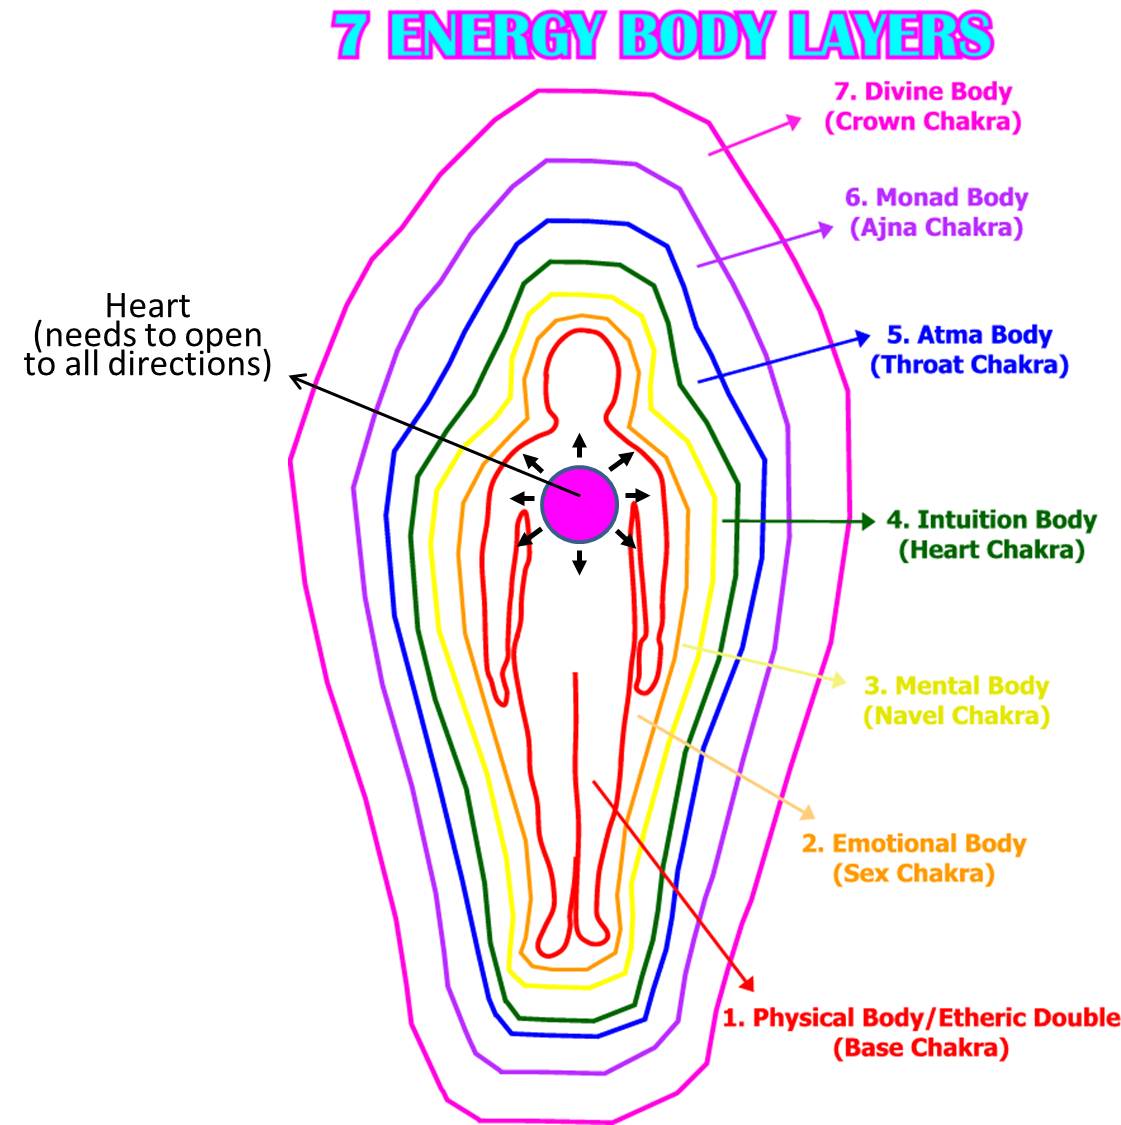 Body-Layers-Open-Heart